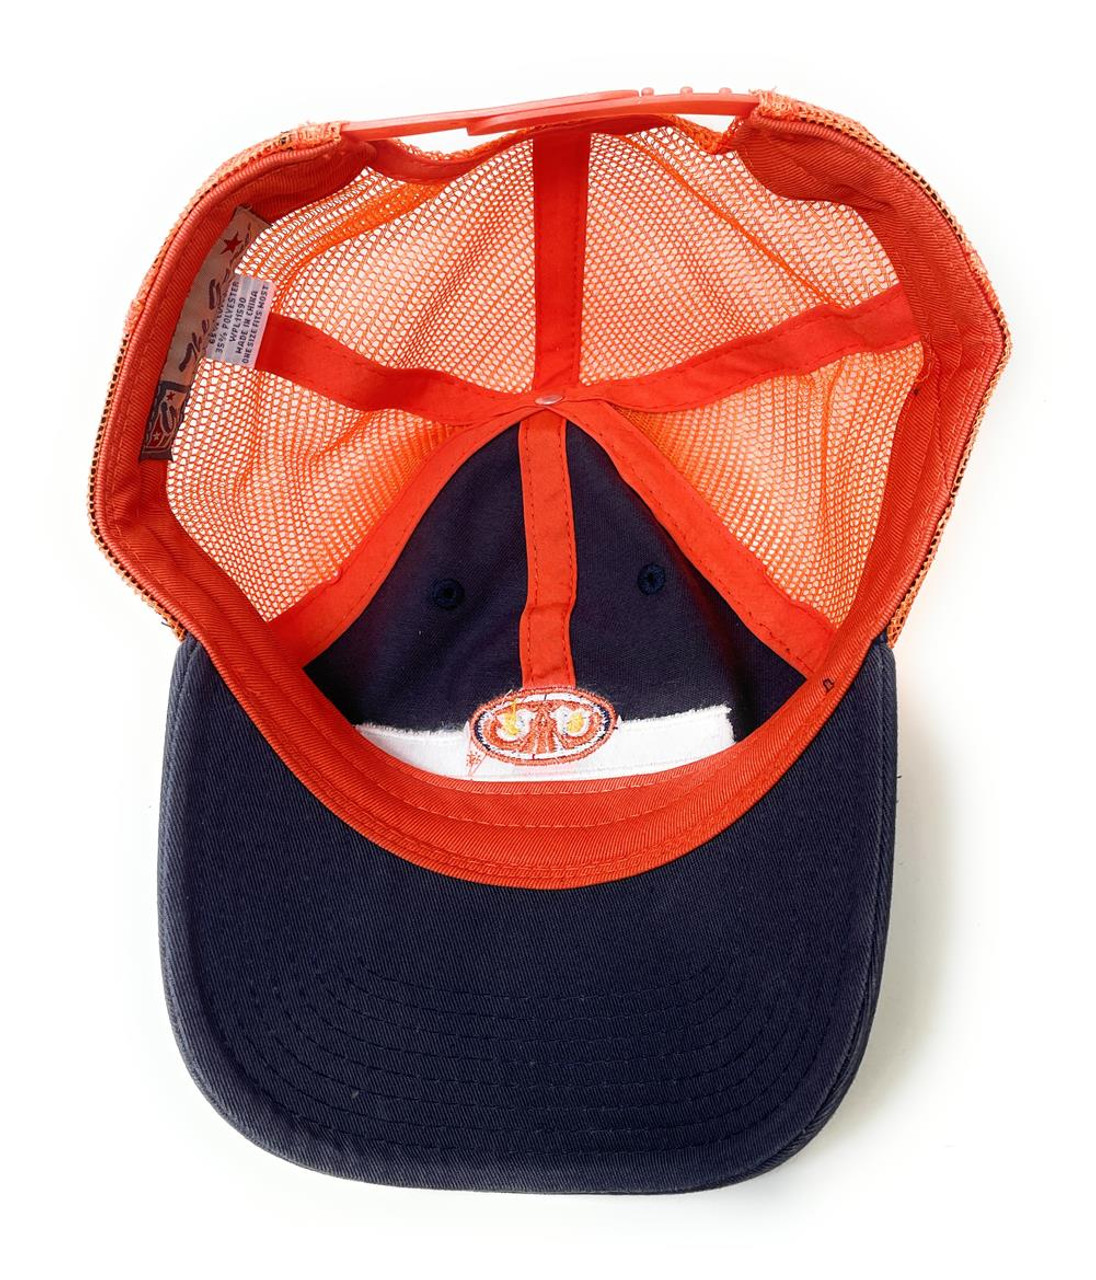 St. Louis Blues Hat, Hockey Hat, Blues Hat, Blues Cap, Women's Baseball Cap, Distressed Hat, Vintage Baseball Hat, Weathered Hat, Baseball